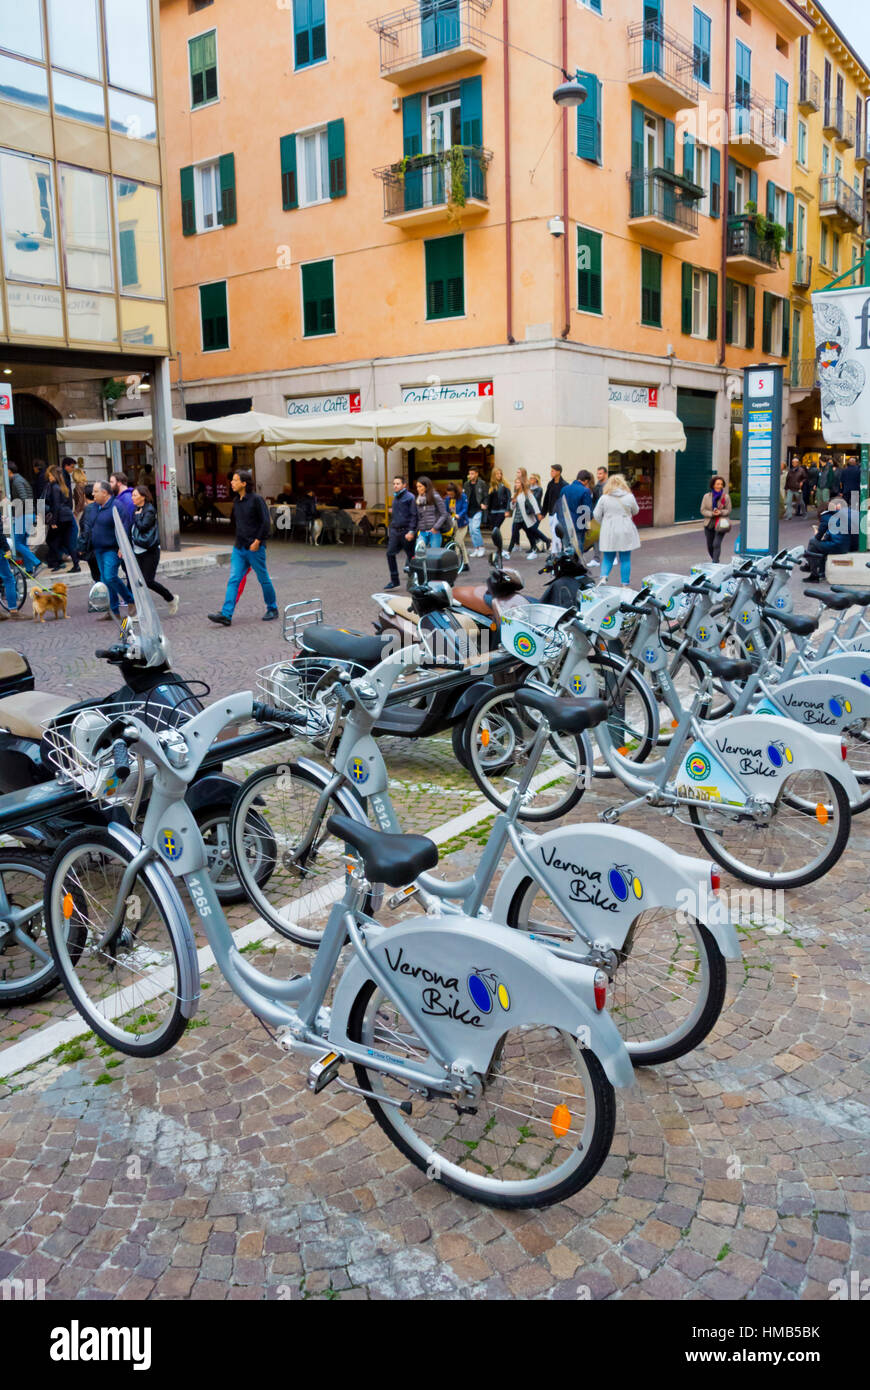 Verona bike city bike schema di noleggio biciclette, Verona, Veneto, Italia  Foto stock - Alamy